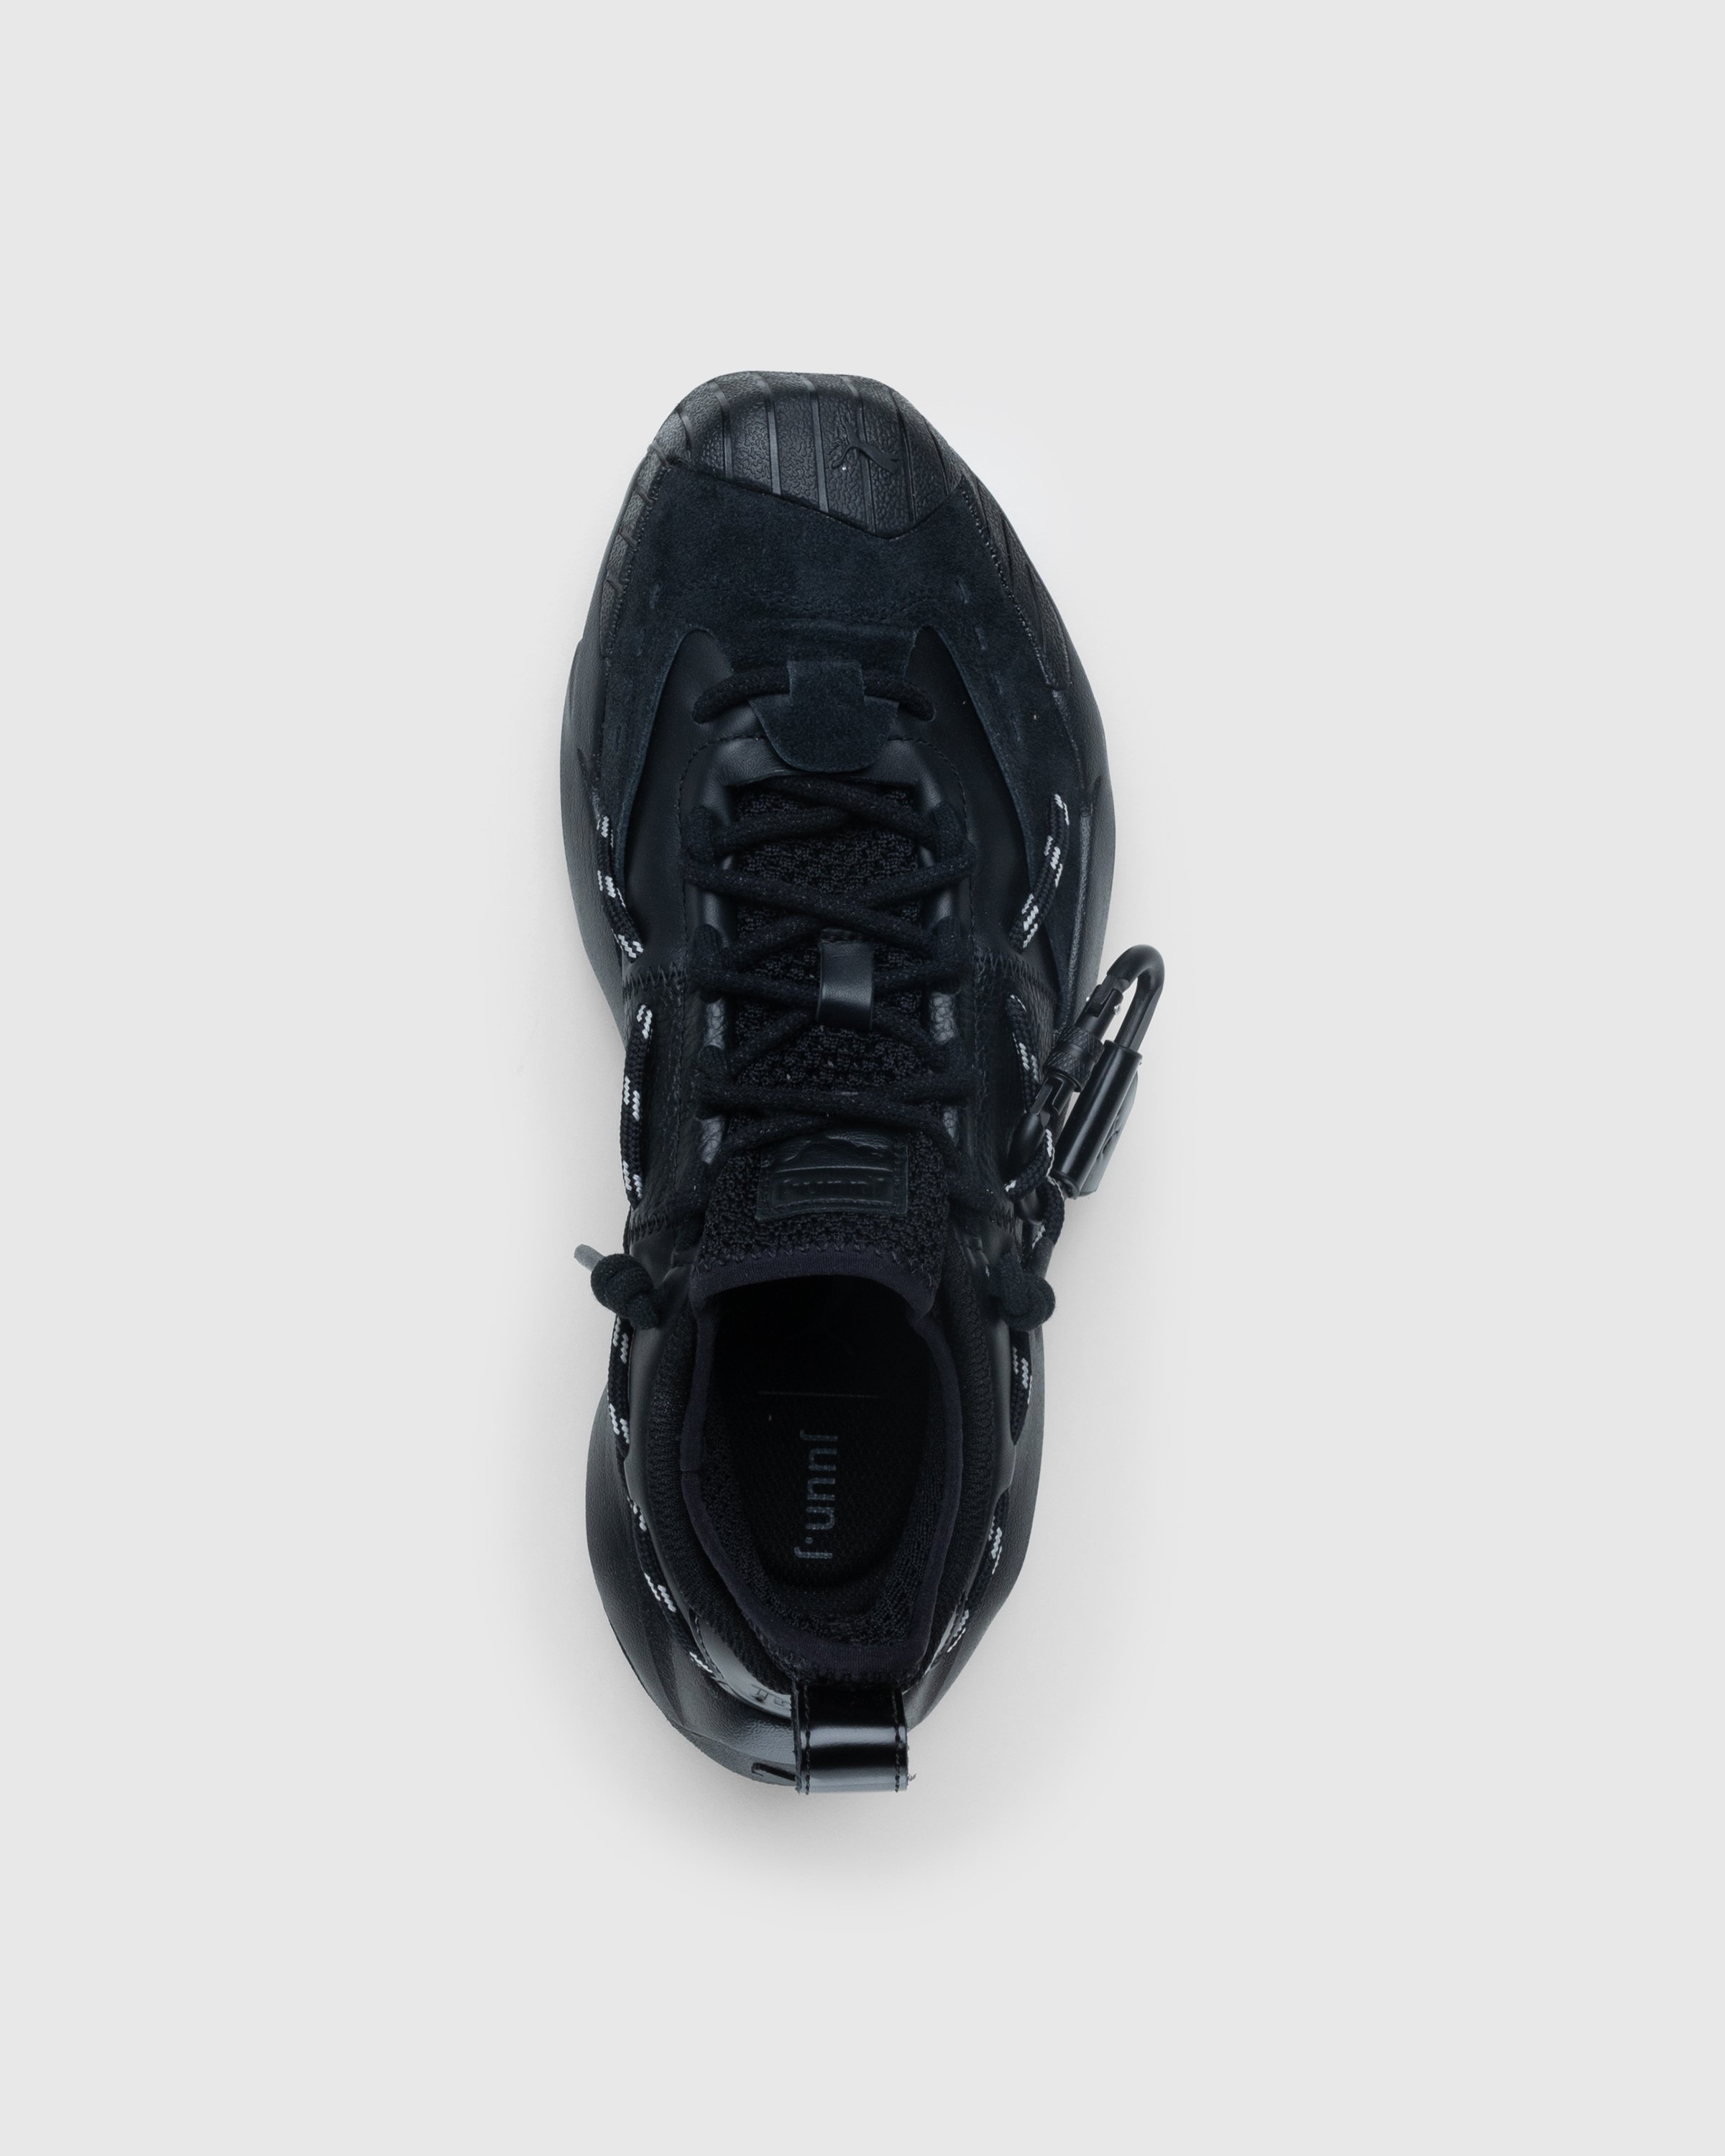 Puma - Plexus JUUN.J - Footwear - Black - Image 5